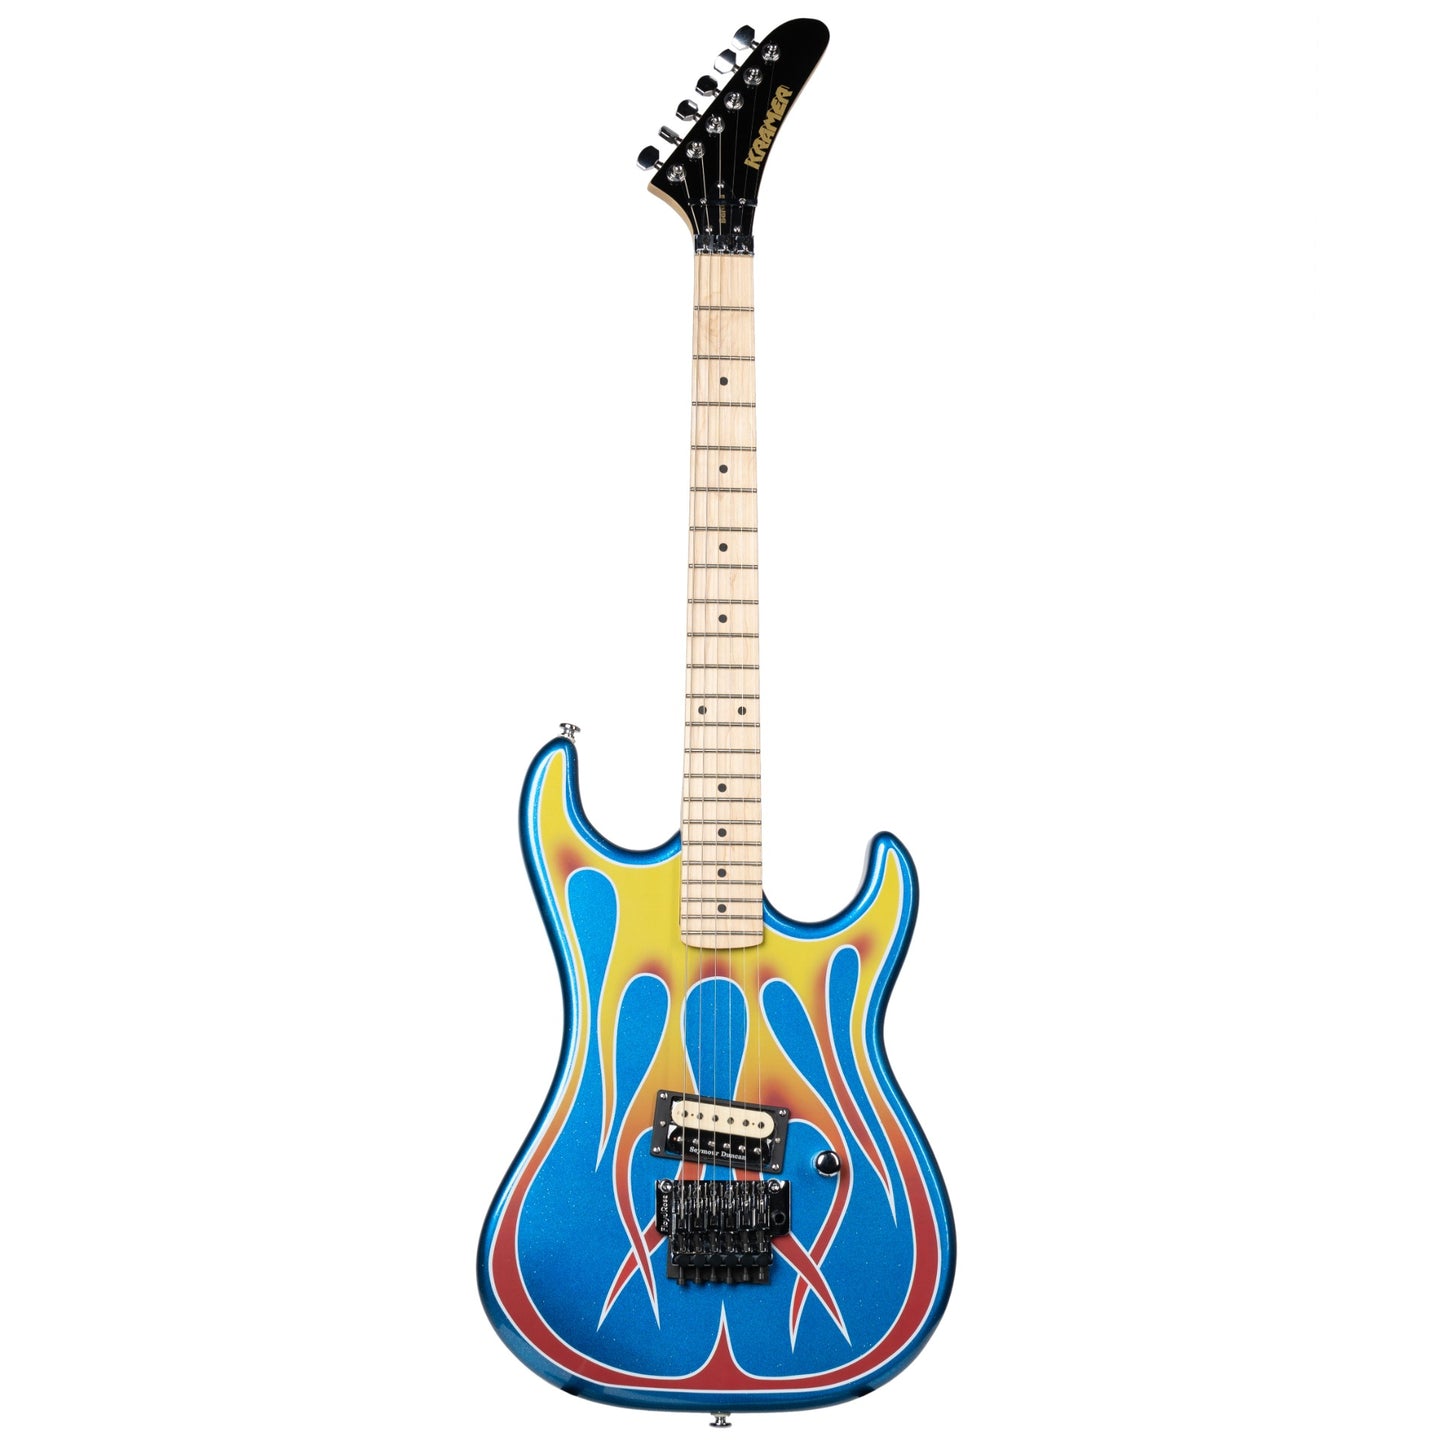 Kramer Baretta Electric Guitar with “Hot Rod” Custom Graphics